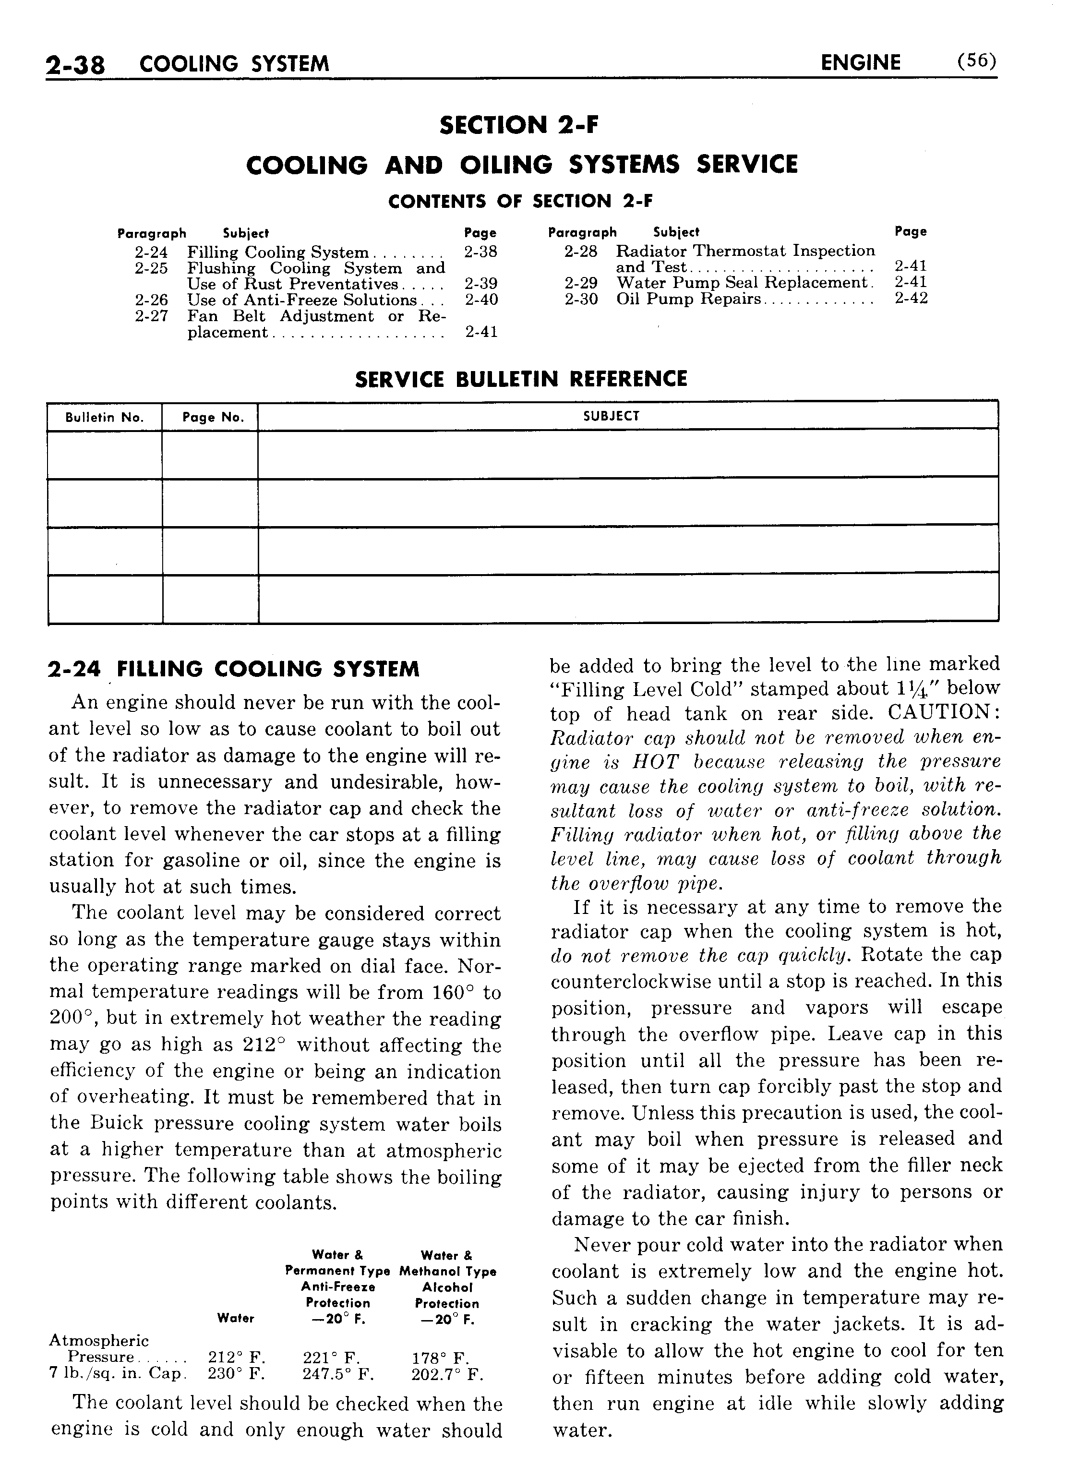 n_03 1951 Buick Shop Manual - Engine-038-038.jpg